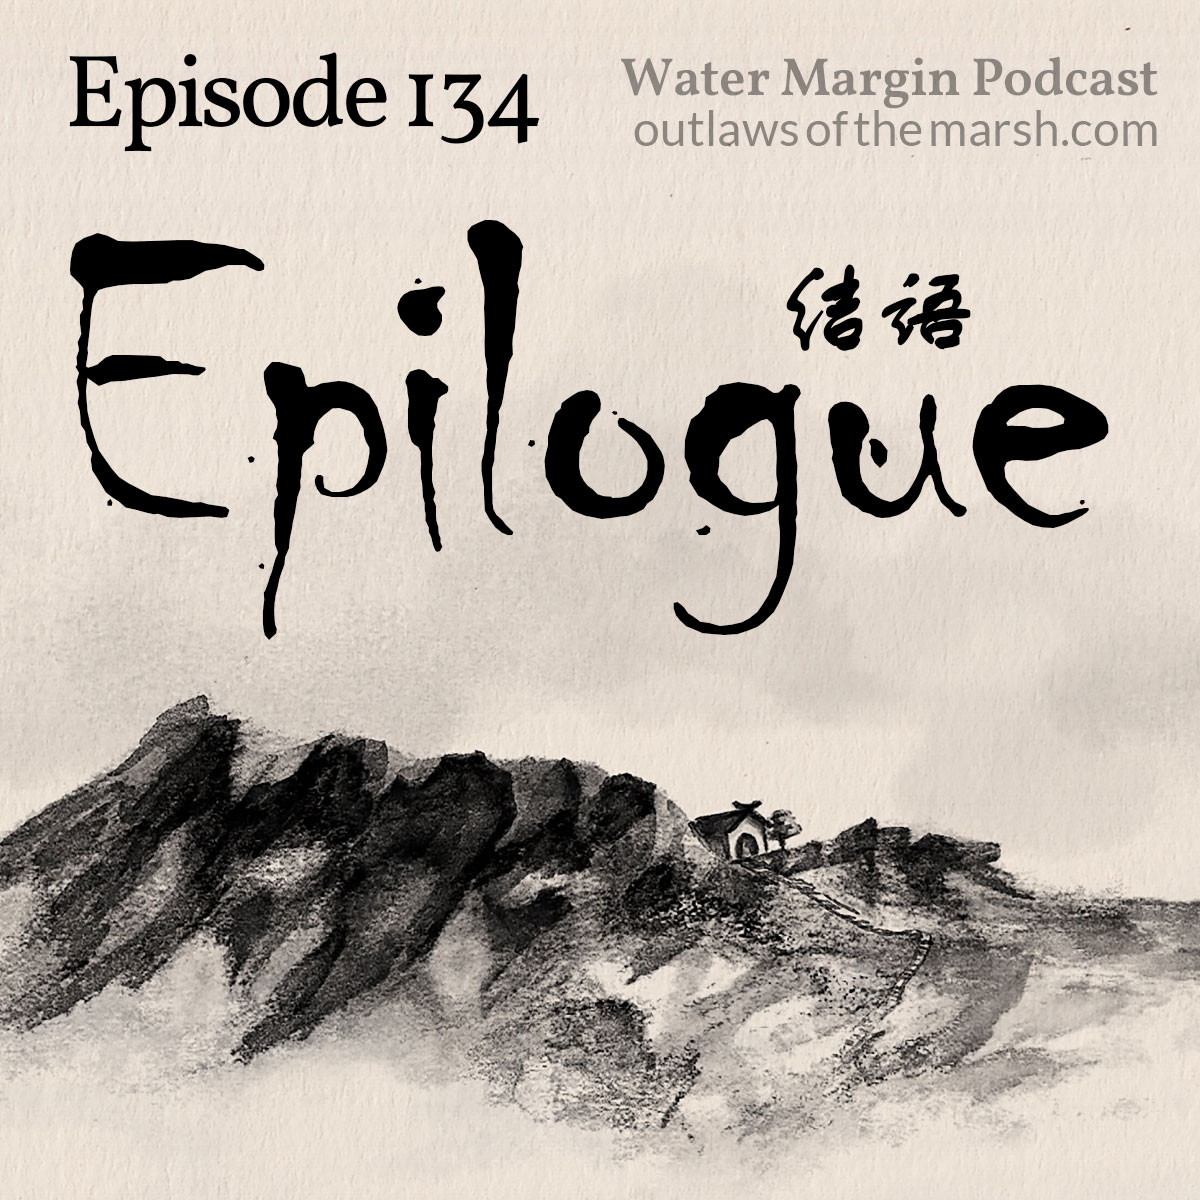 Water Margin Podcast: Episode 134